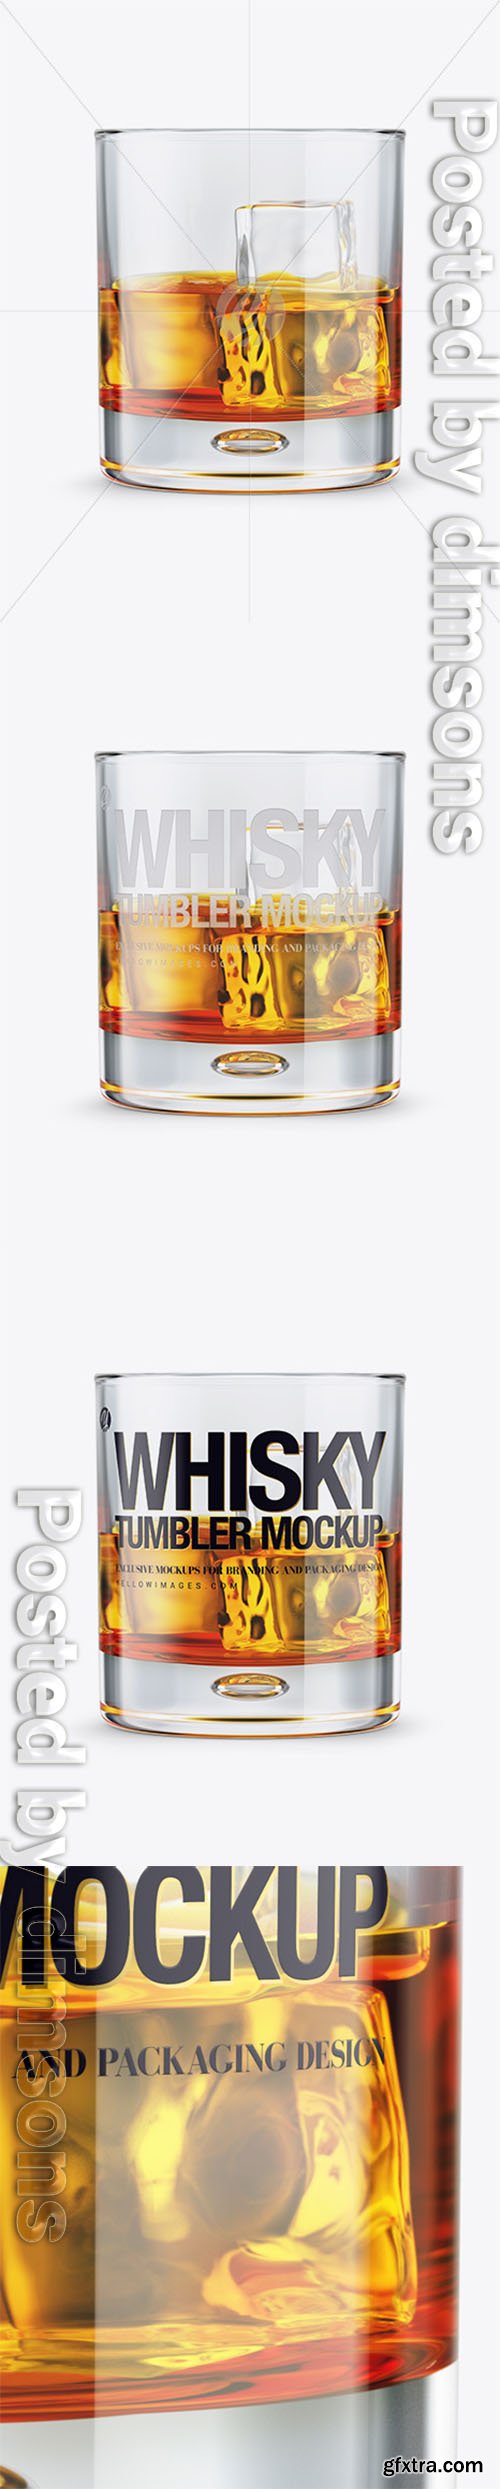 Whisky Tumbler Glass w/ Ice Cubes Mockup 22459